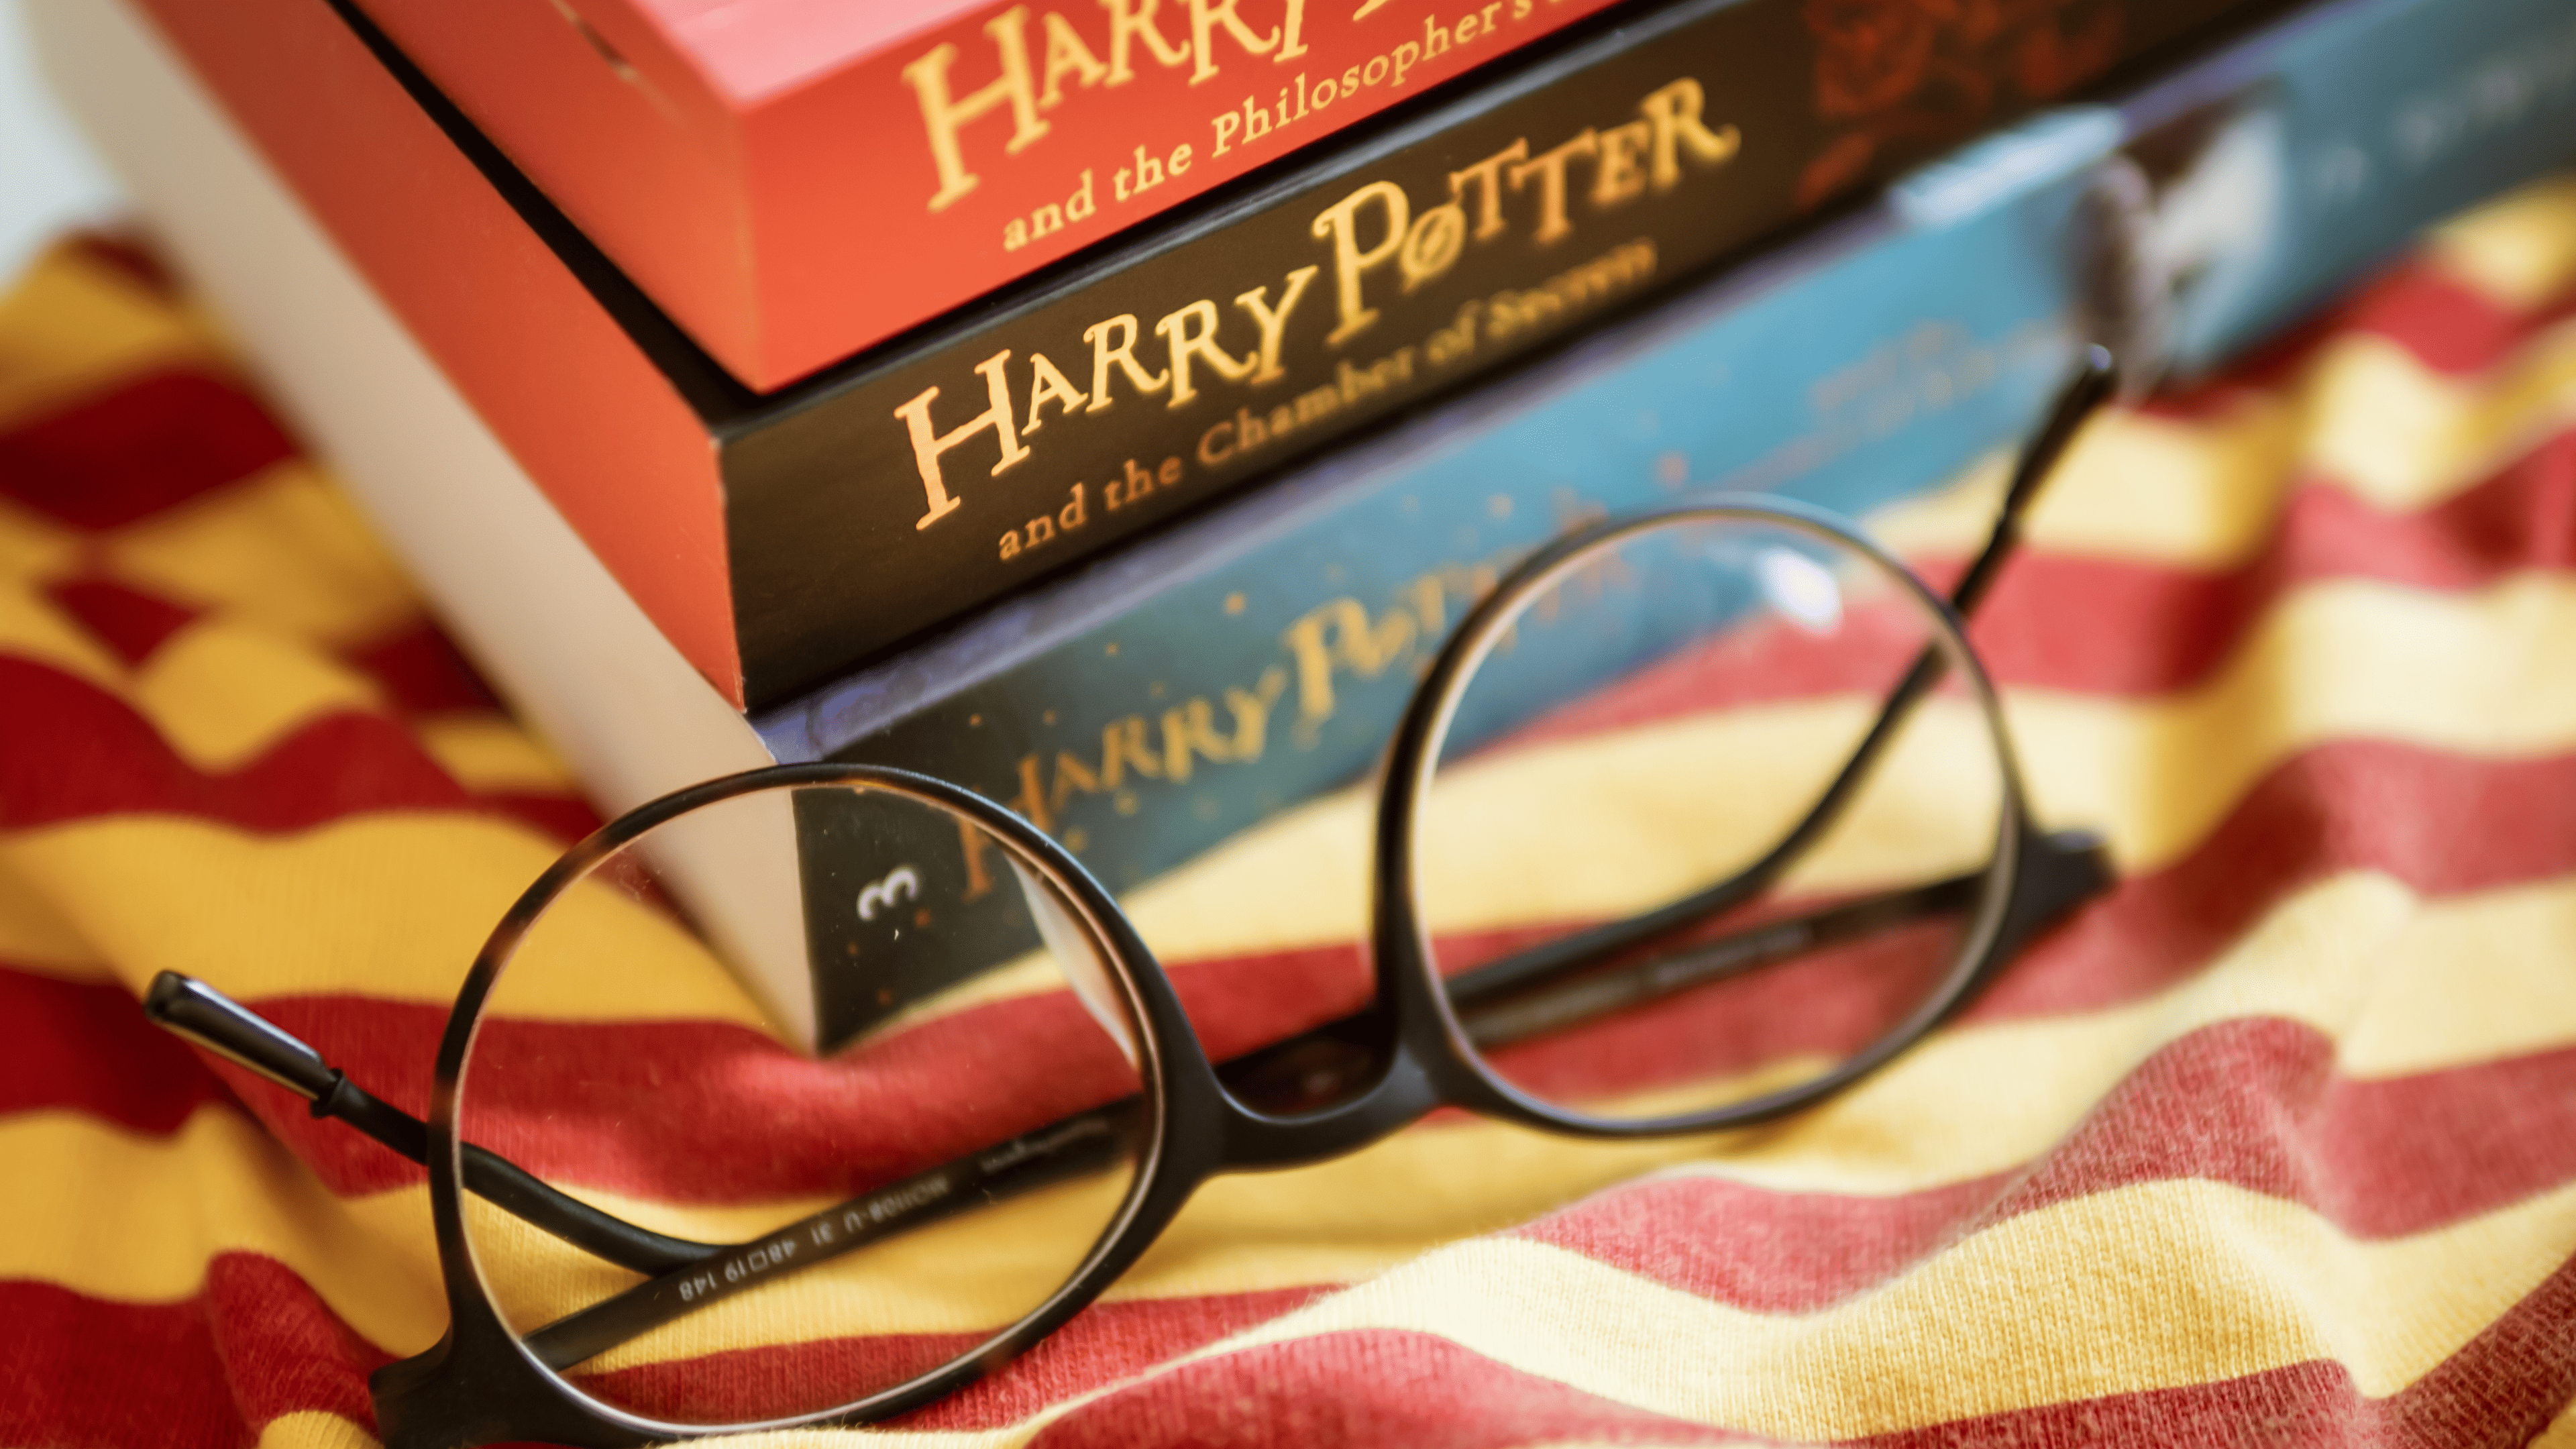 Lumos! Siri Understands Harry Potter Spells